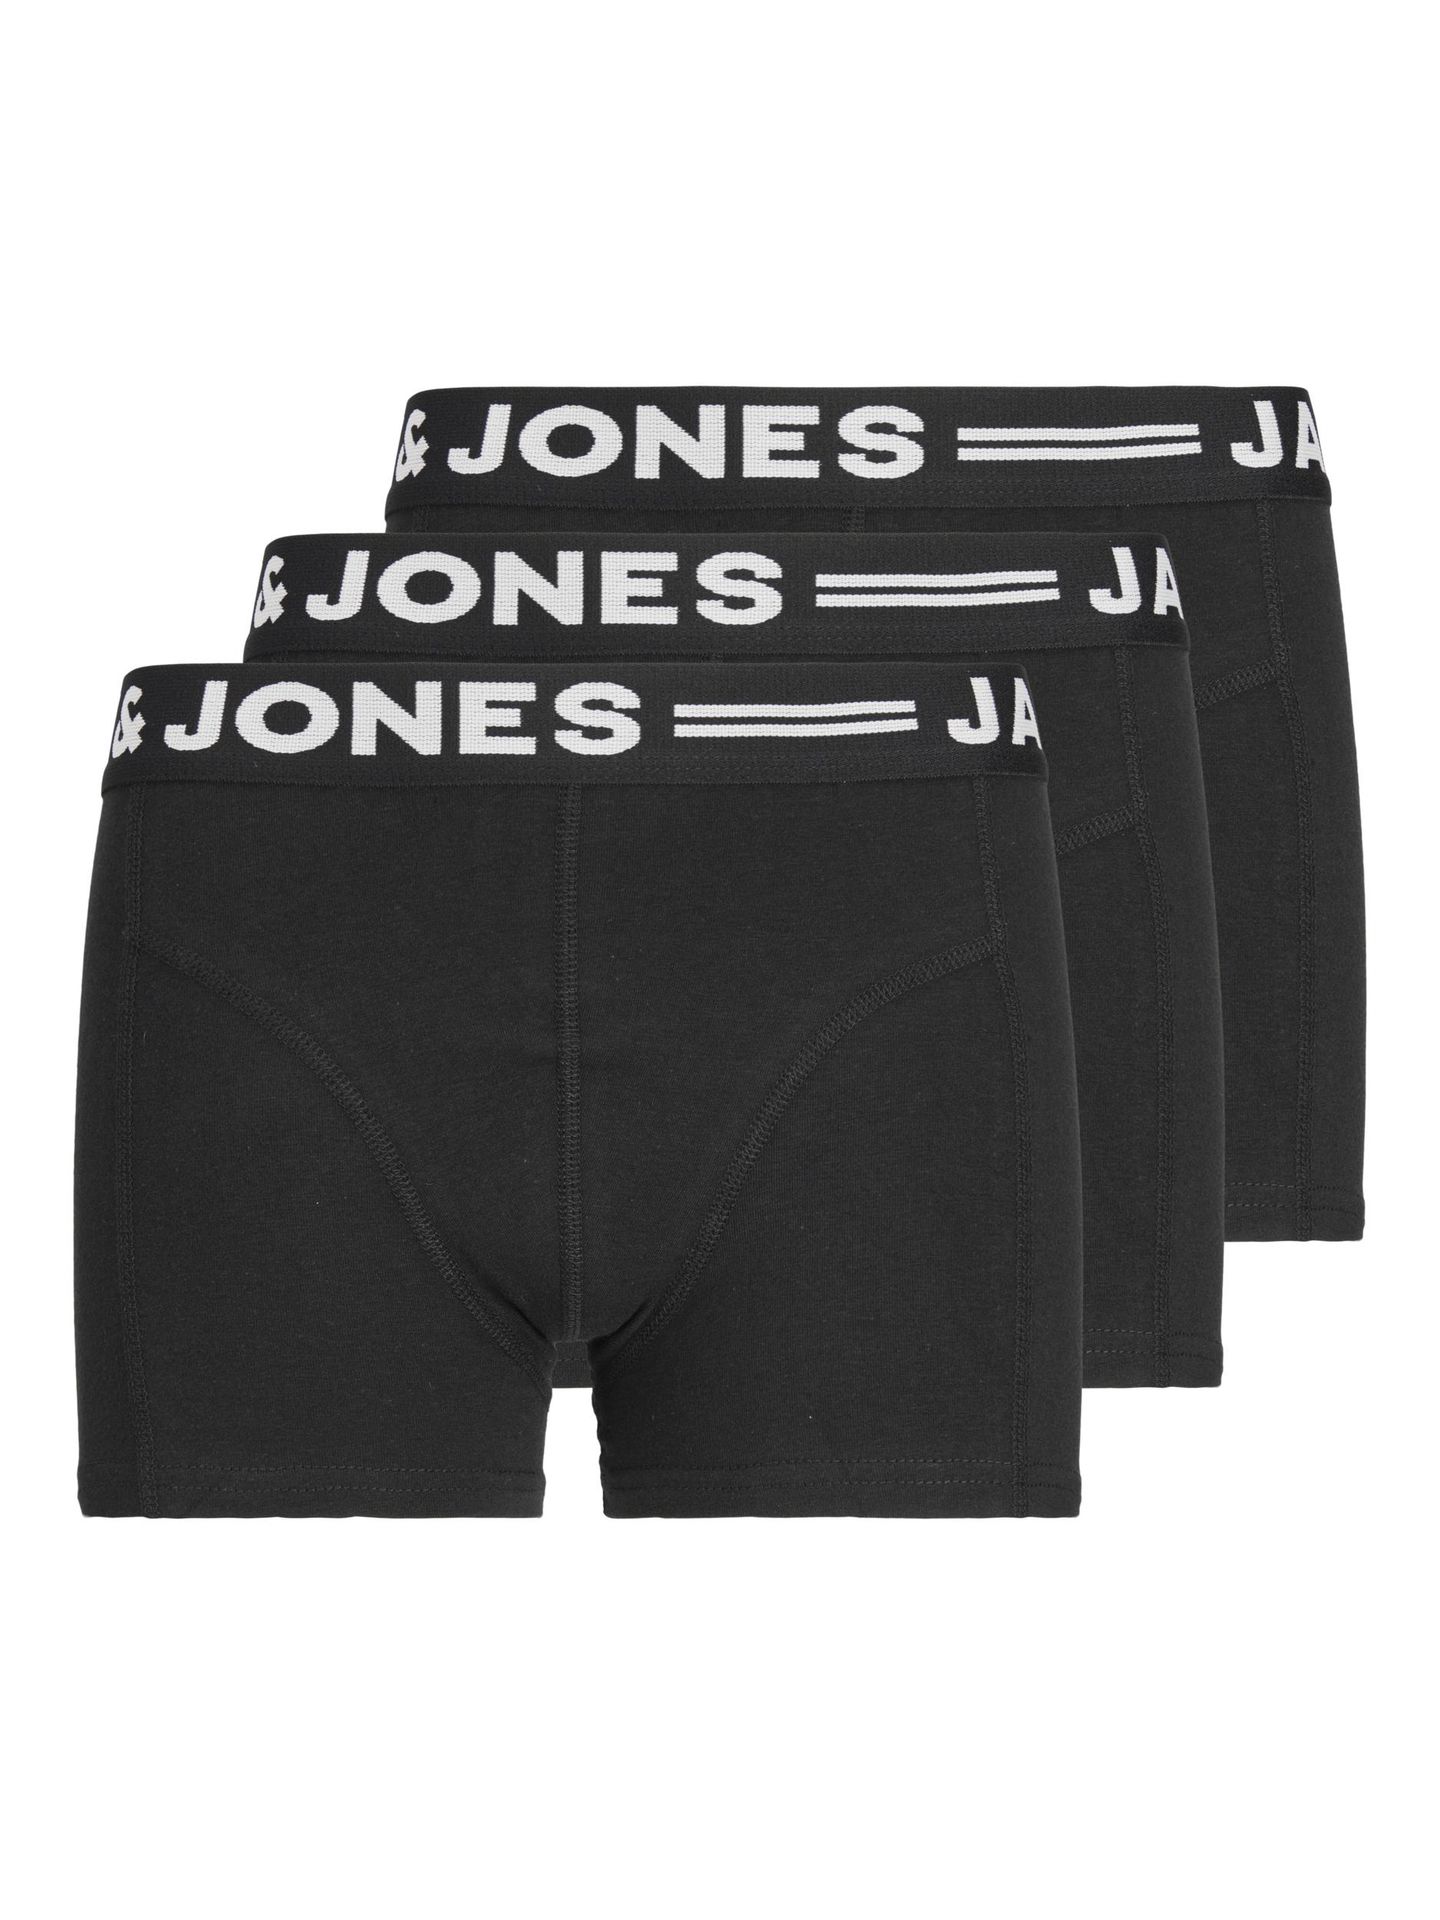 Jack & Jones SENSE TRUNKS 3-PACK NOOS JNR - Black/Black wasitba Black/Black wasitband w.white logo 00096875-EKA26011400001090